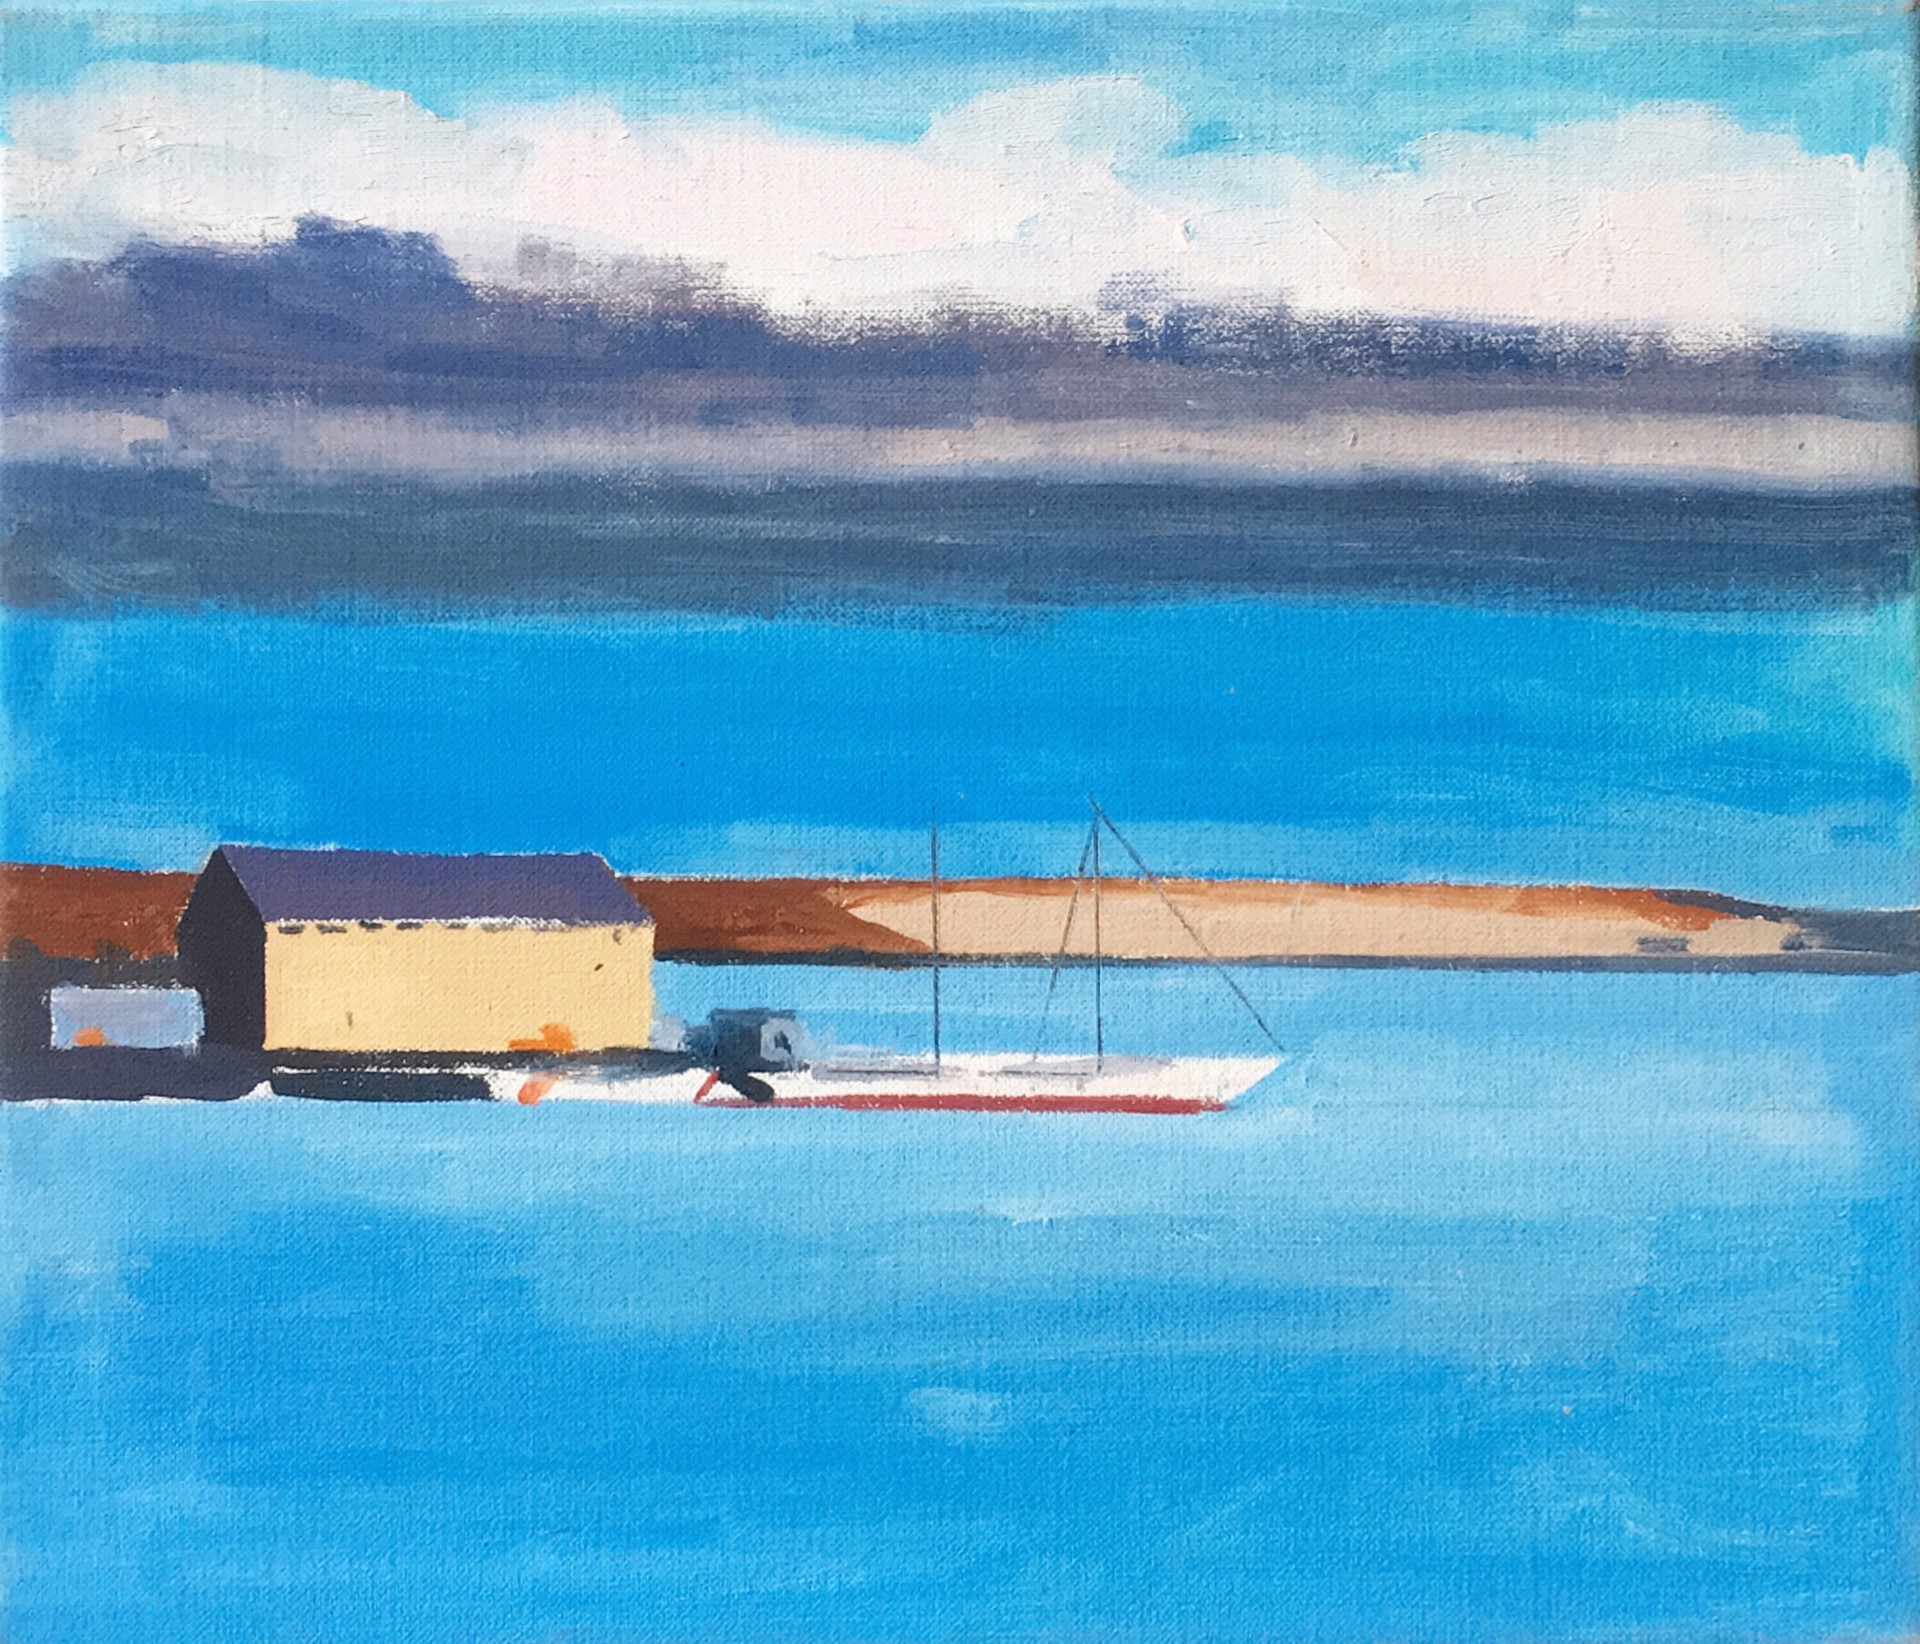 The Bowdoin in the Harbor by Salvatore Del Deo